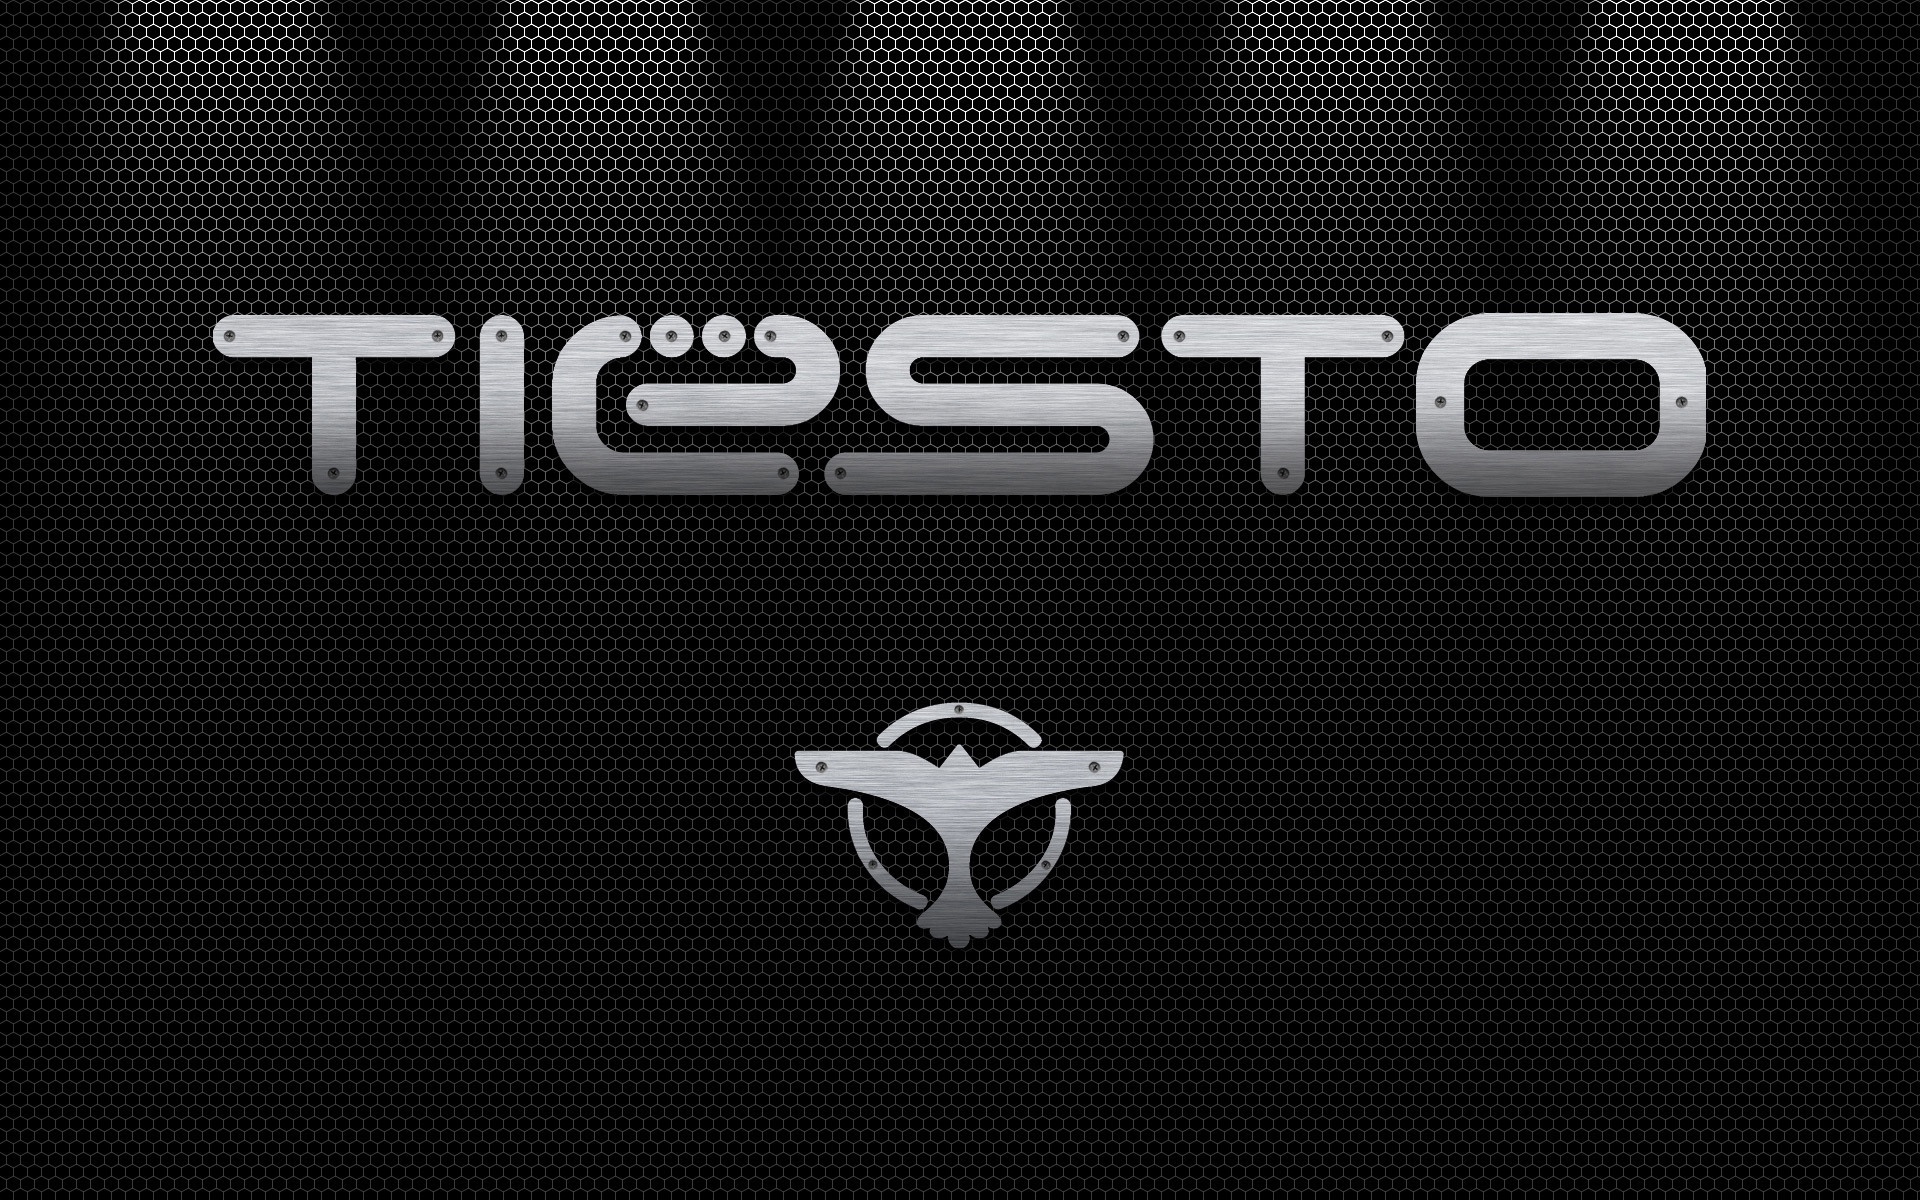 DJ Tiesto logo wallpapers and images   wallpapers